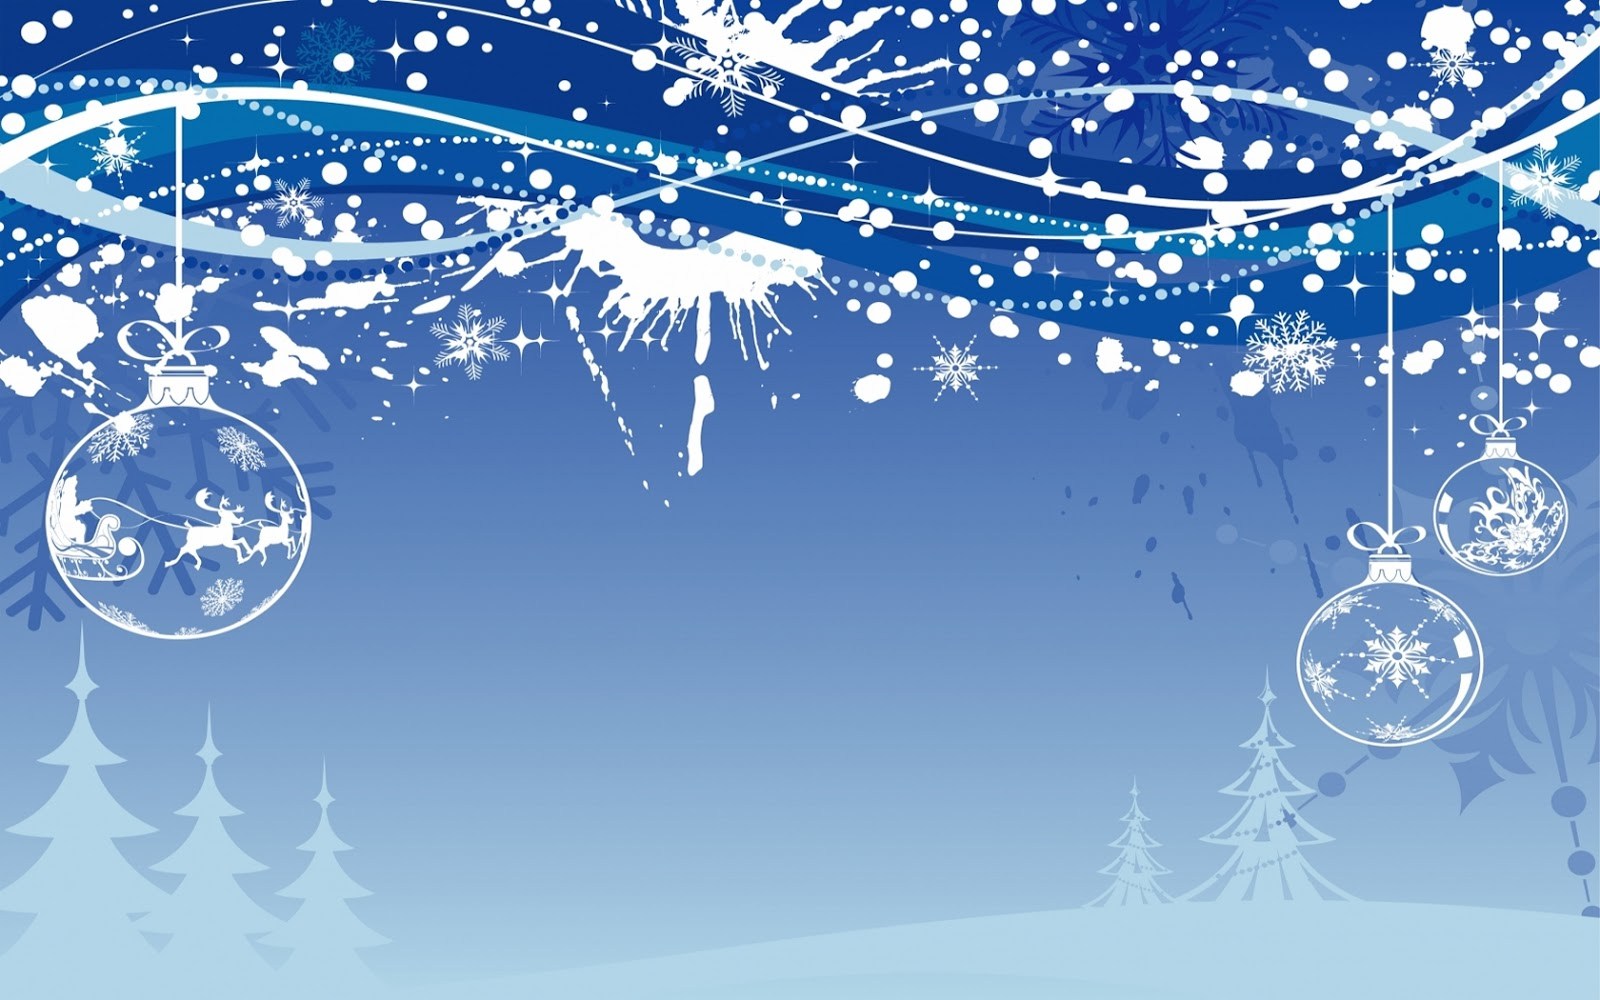 Snow clipart animated 3 » Clipart Portal.